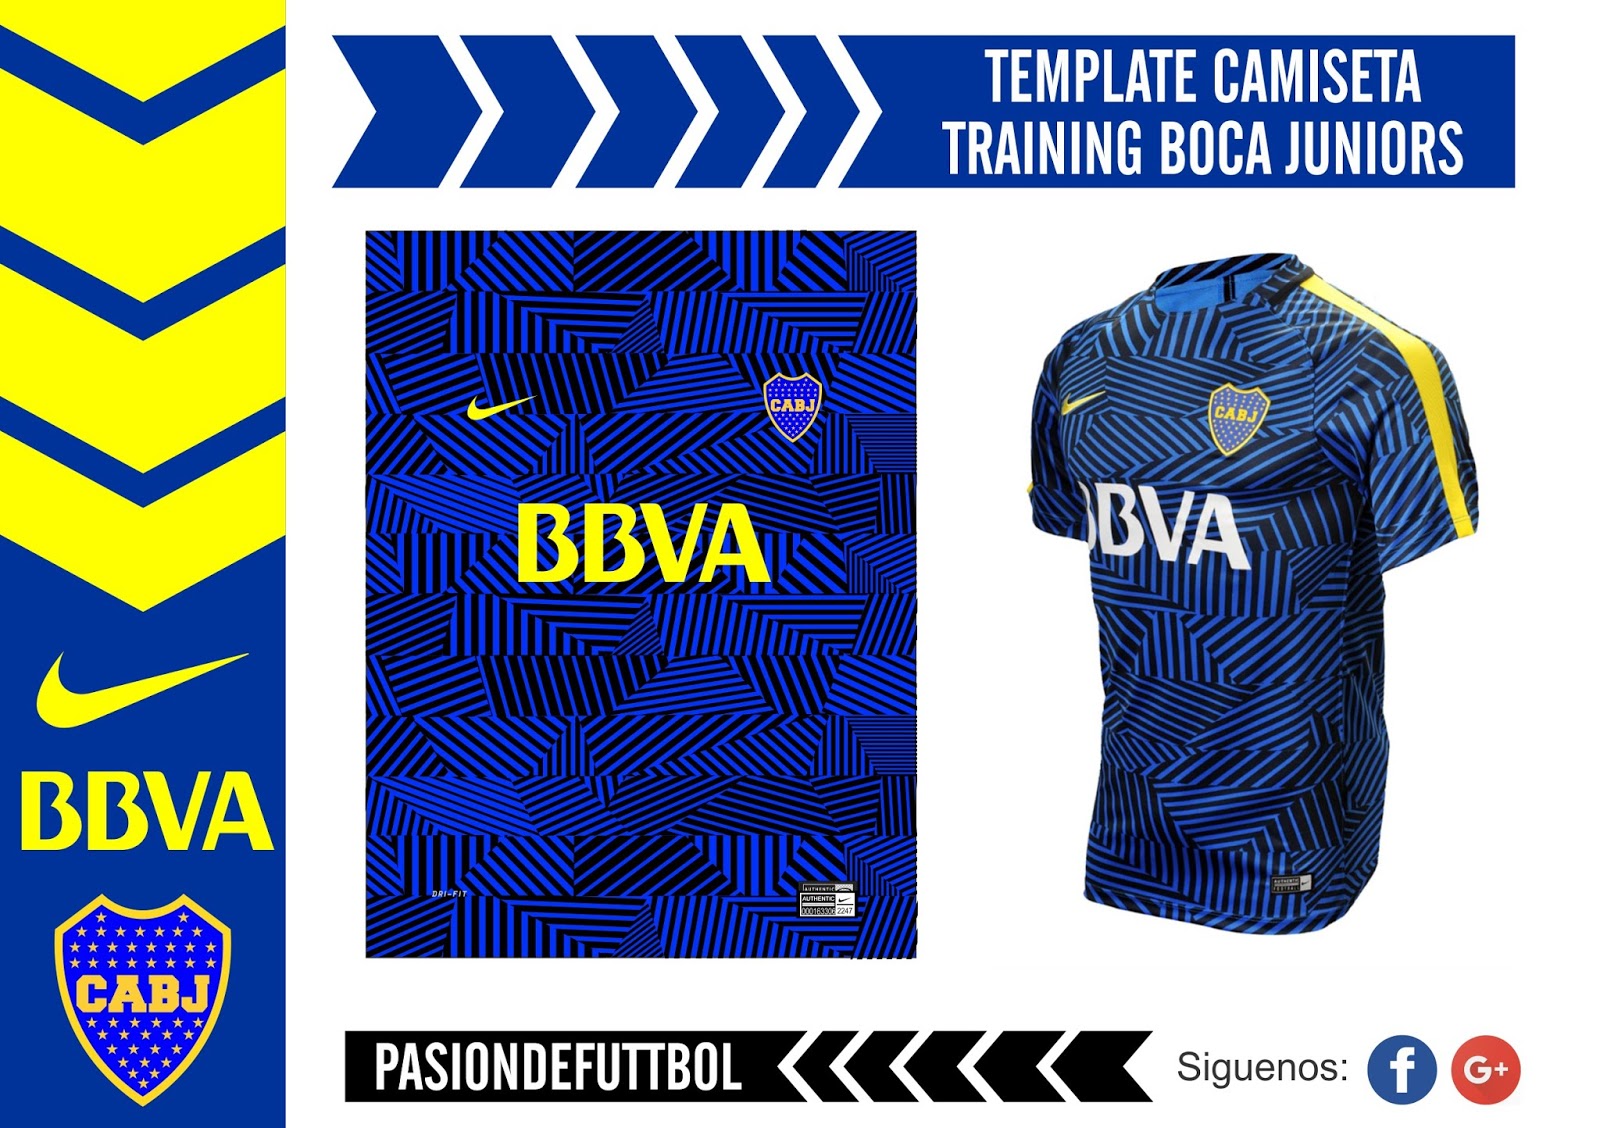 Diseños, Vectores y Templates para Camisetas de Futbol: TEMPLATE CAMISETA NIKE TRAINING BOCA JUNIORS